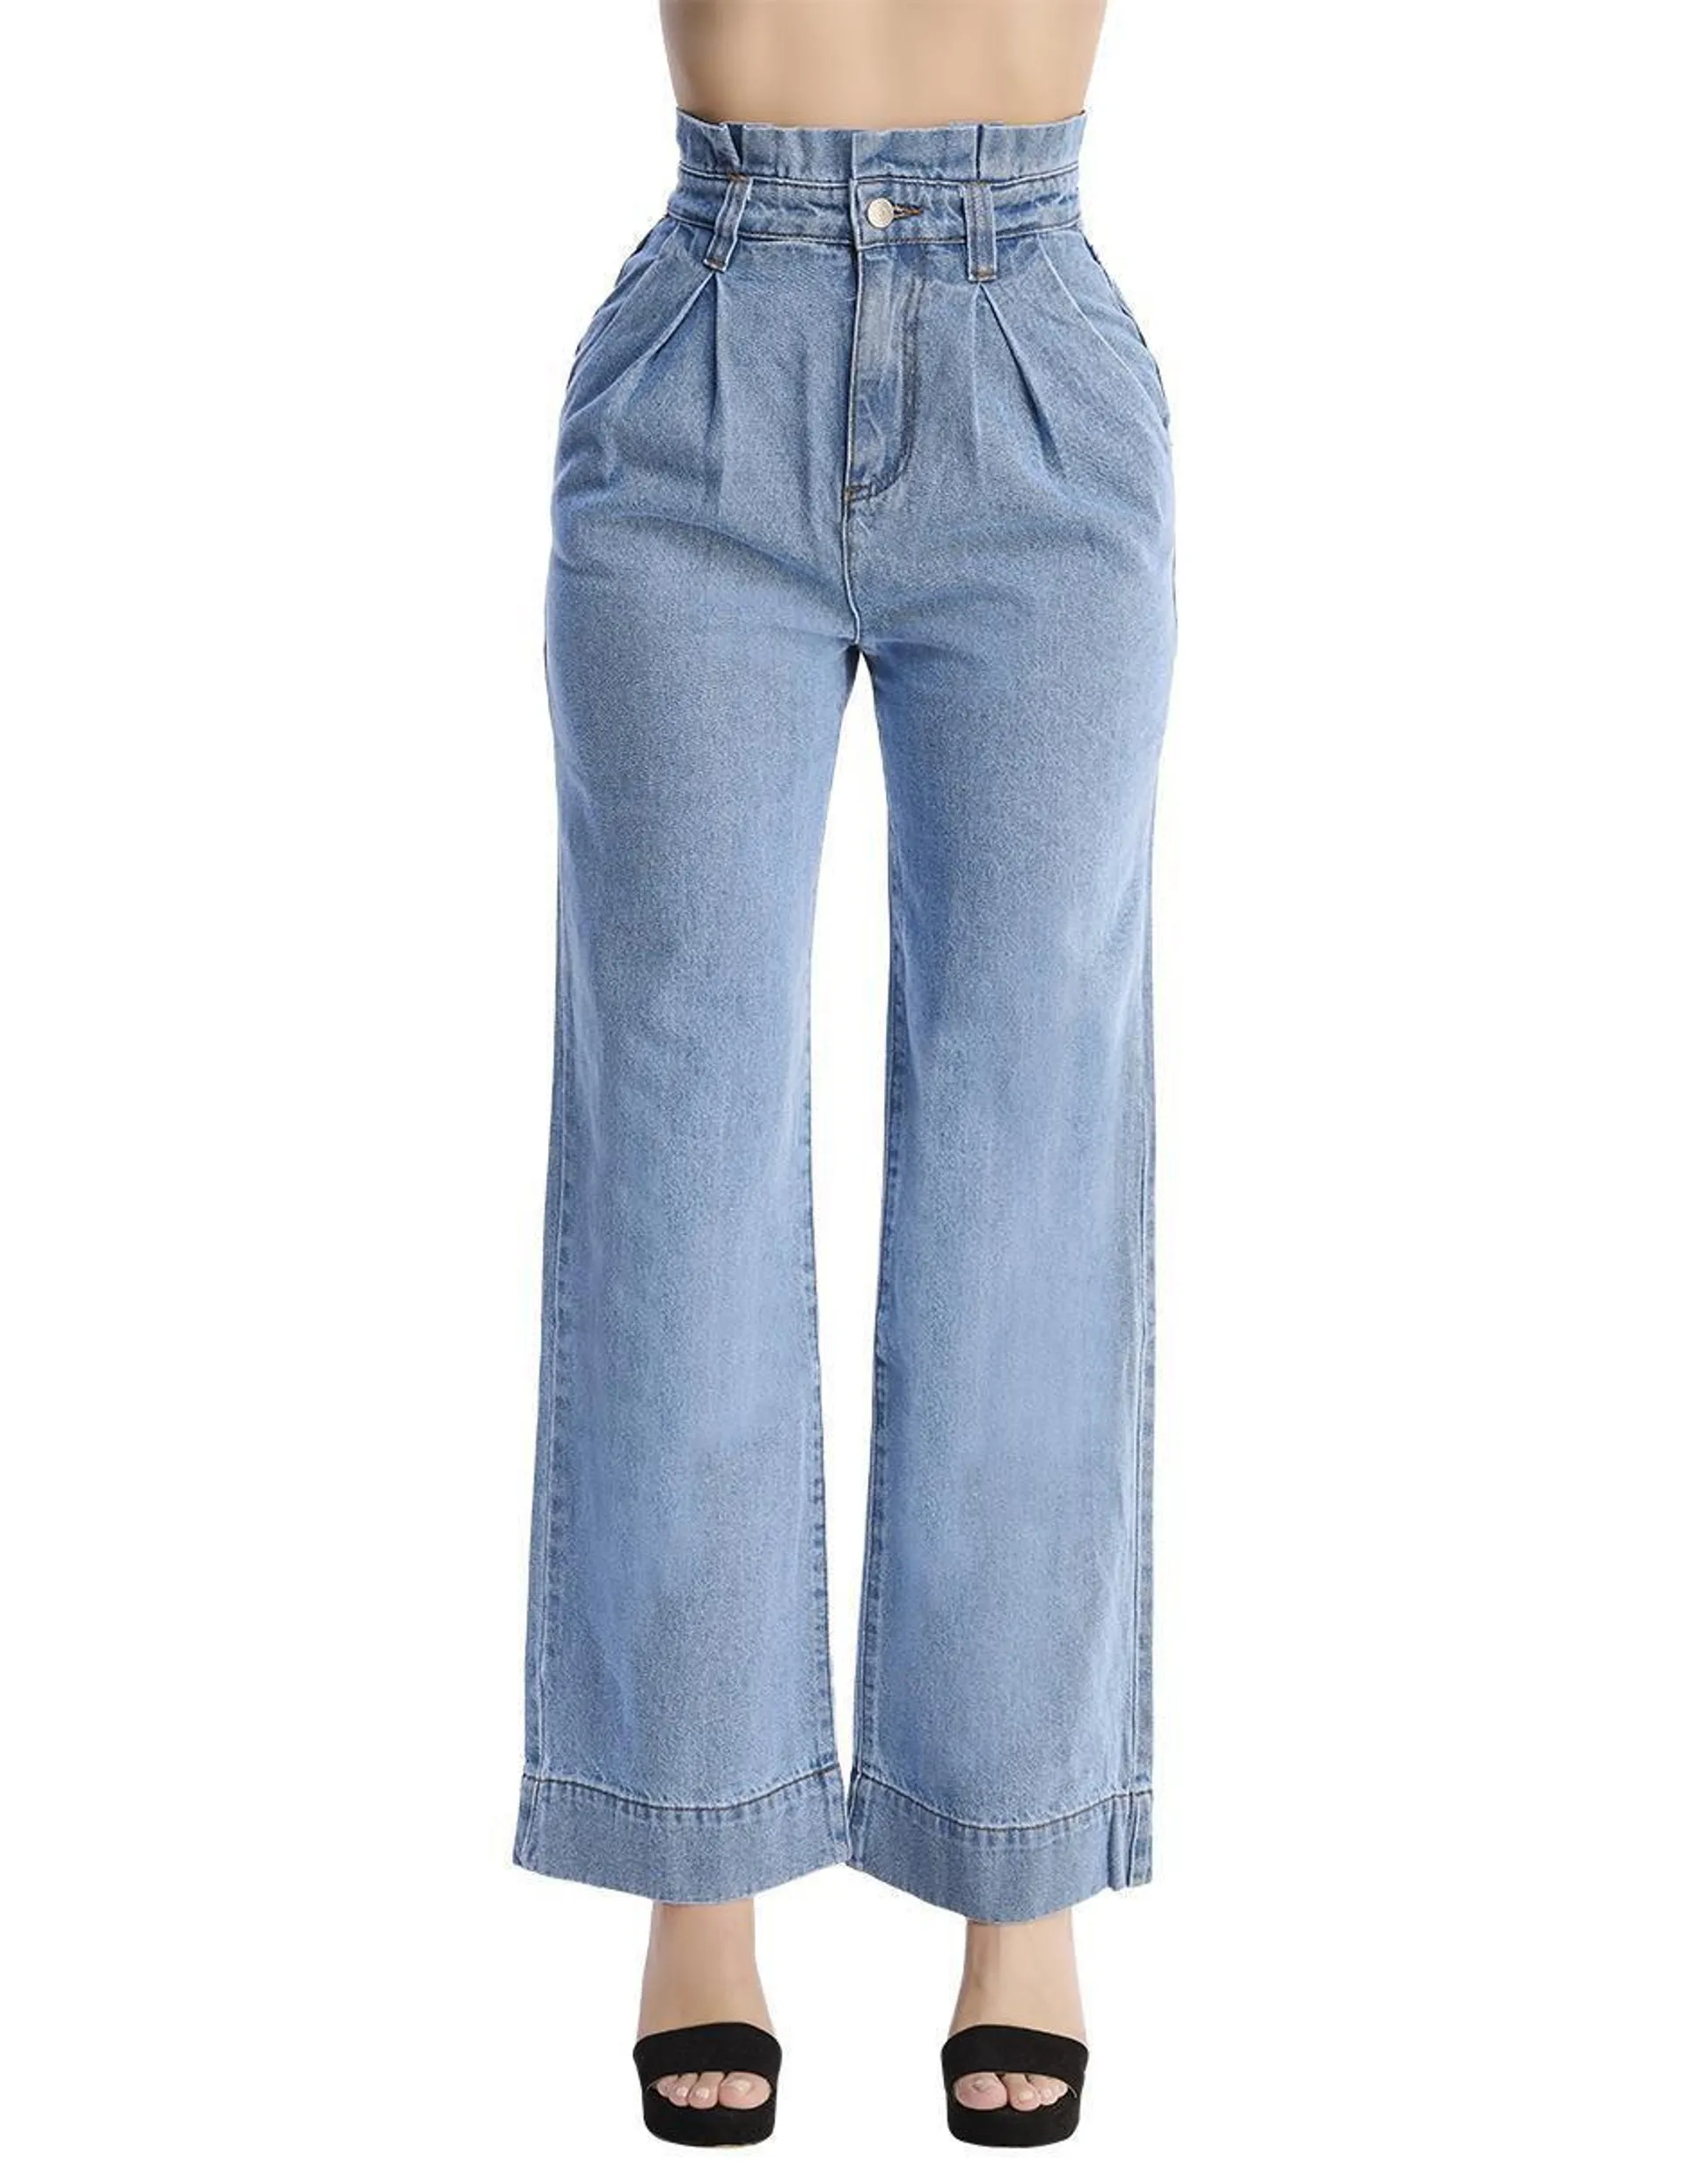 Jeans straight Devendi 113-40 corte cintura alta para mujer